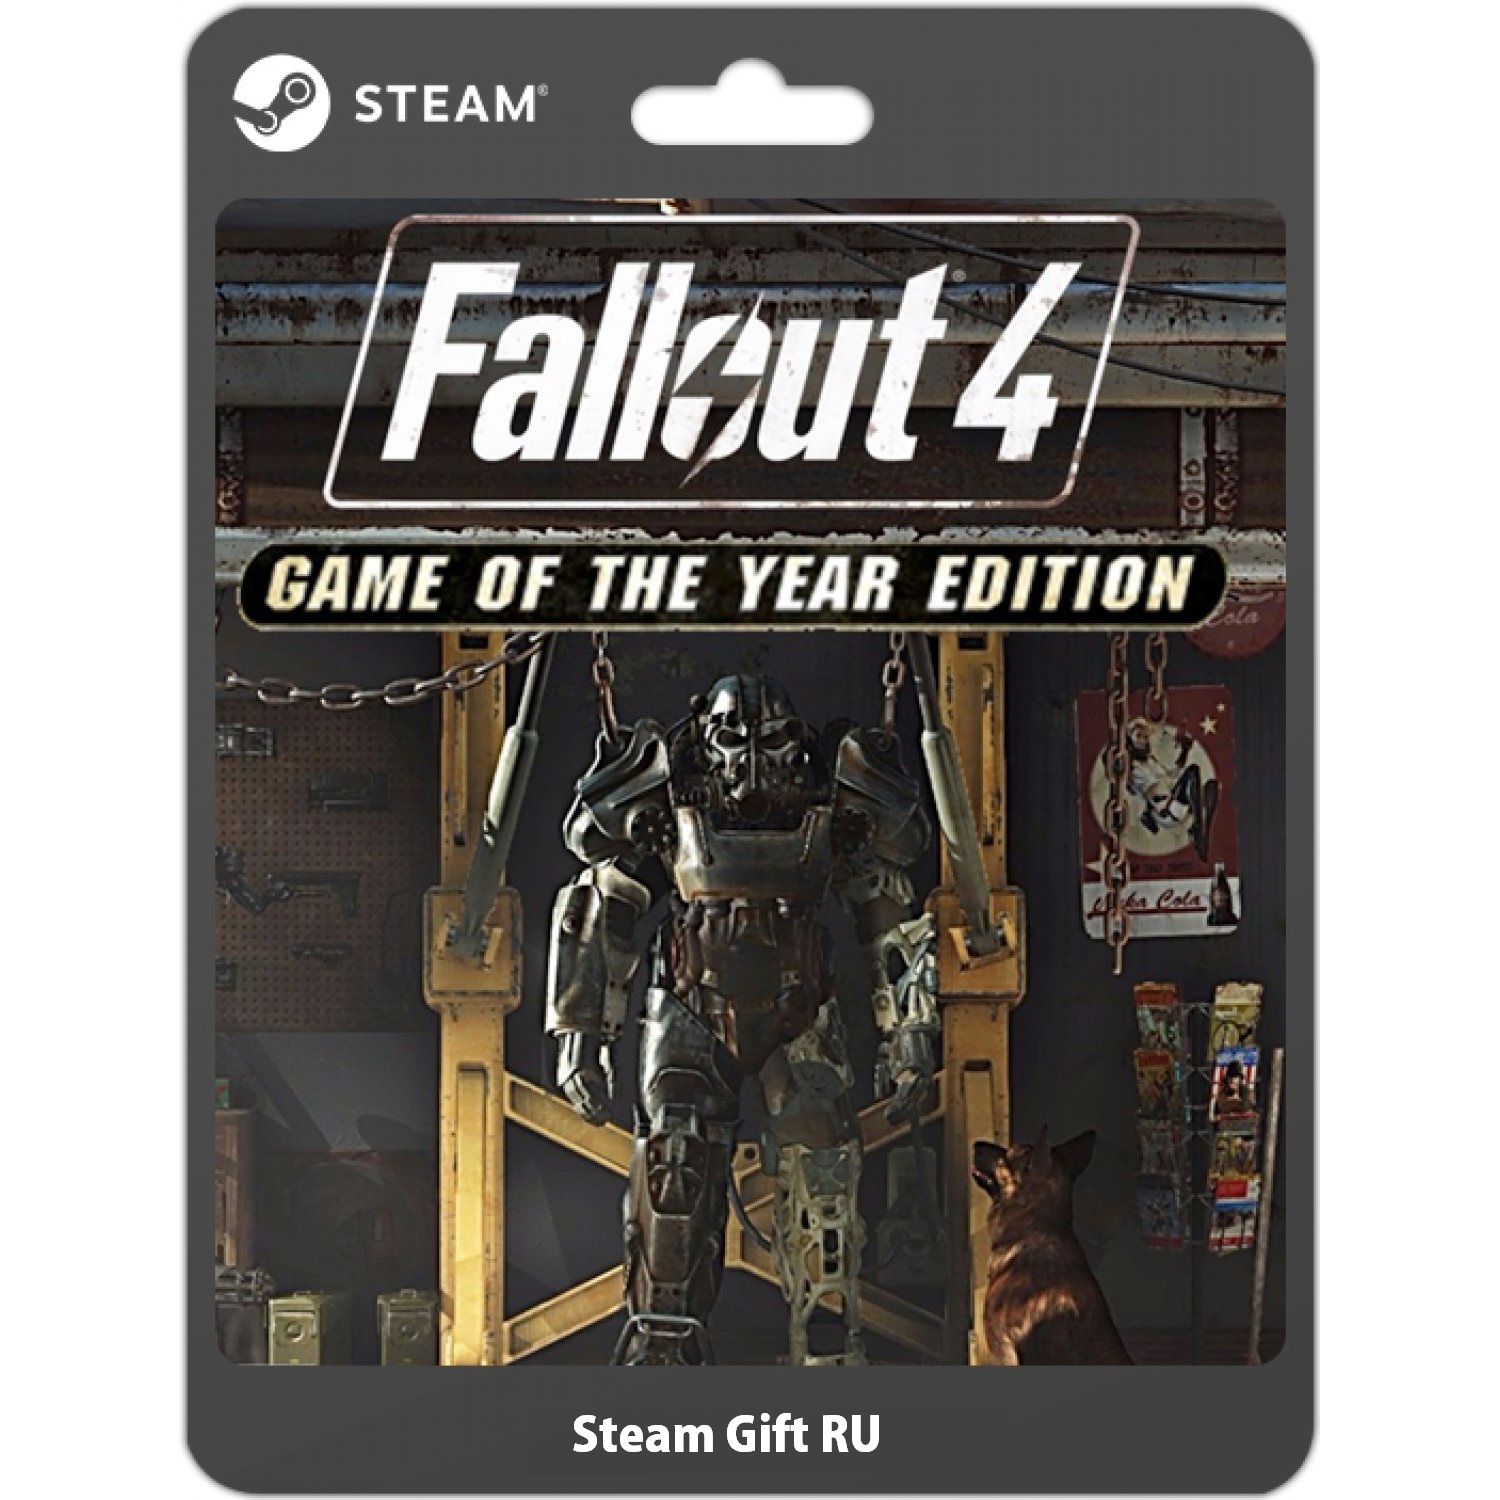 Fallout 4 game of the year edition что входит в комплект фото 91